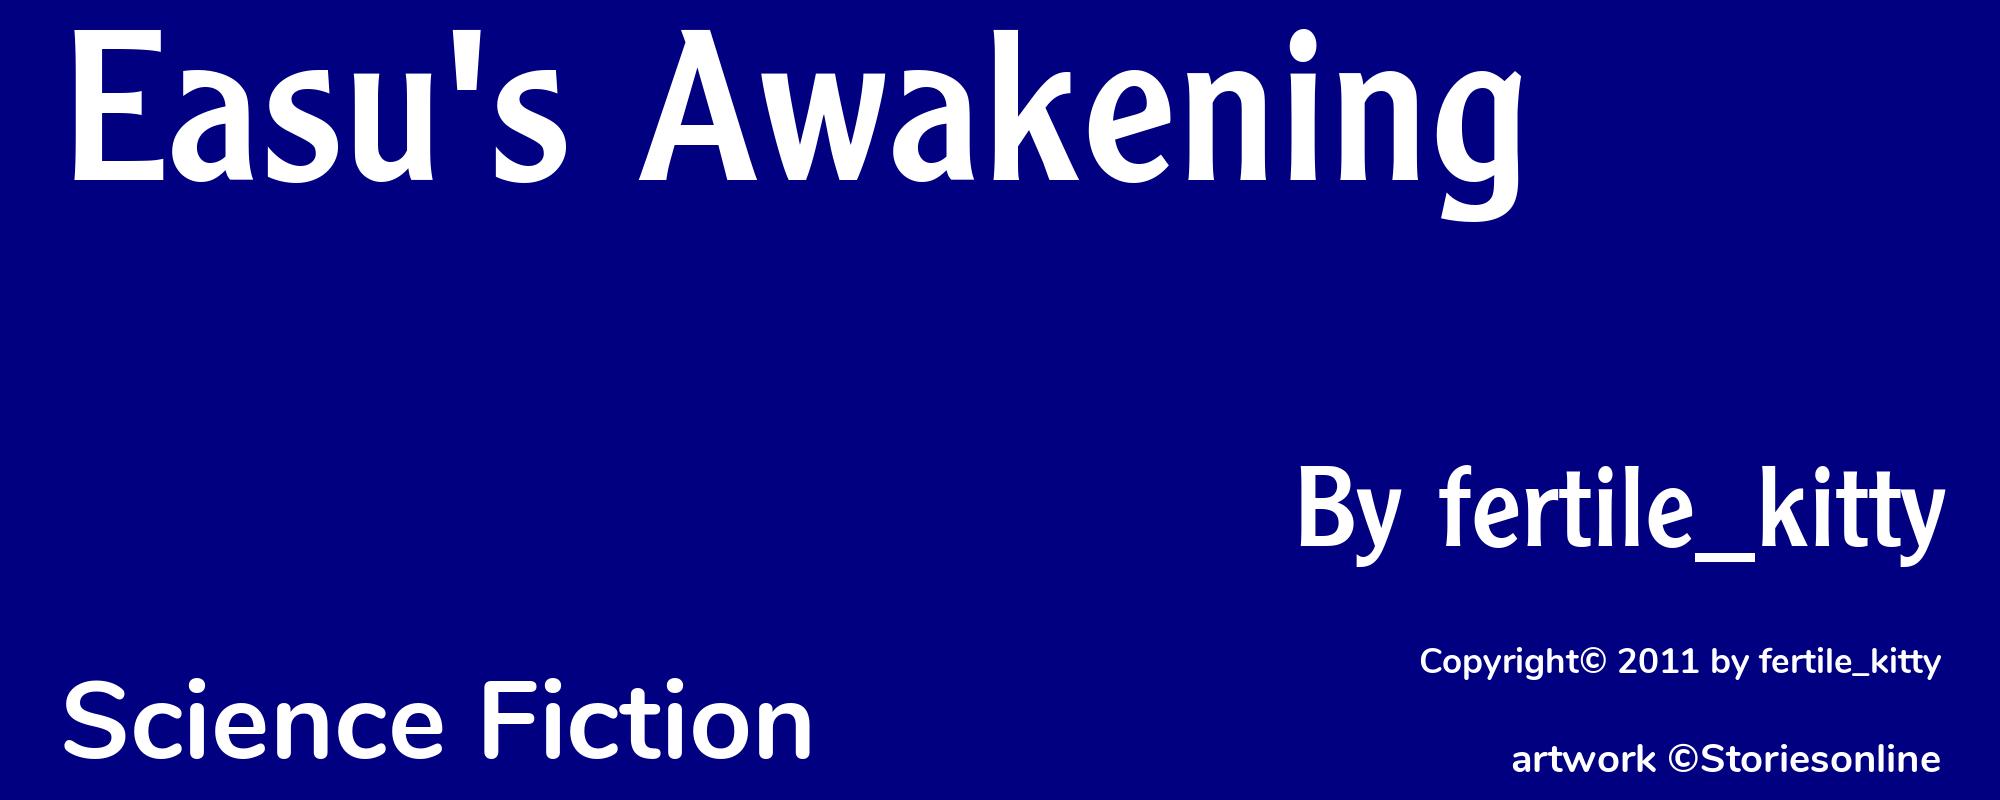 Easu's Awakening - Cover